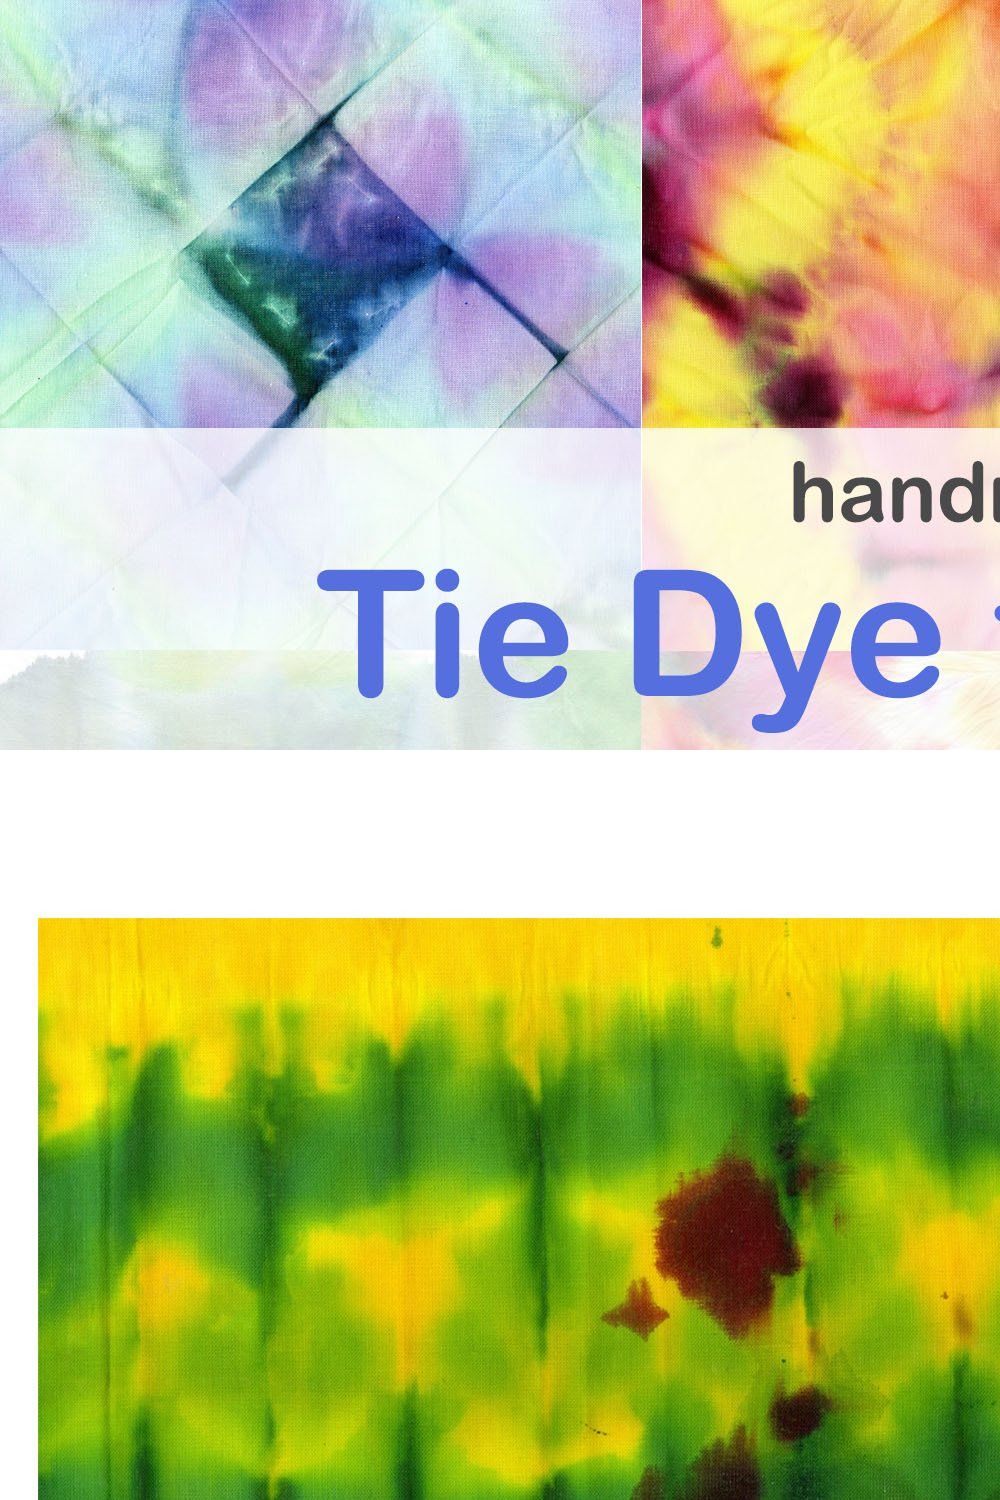 Tie Dye textures 3 pinterest preview image.